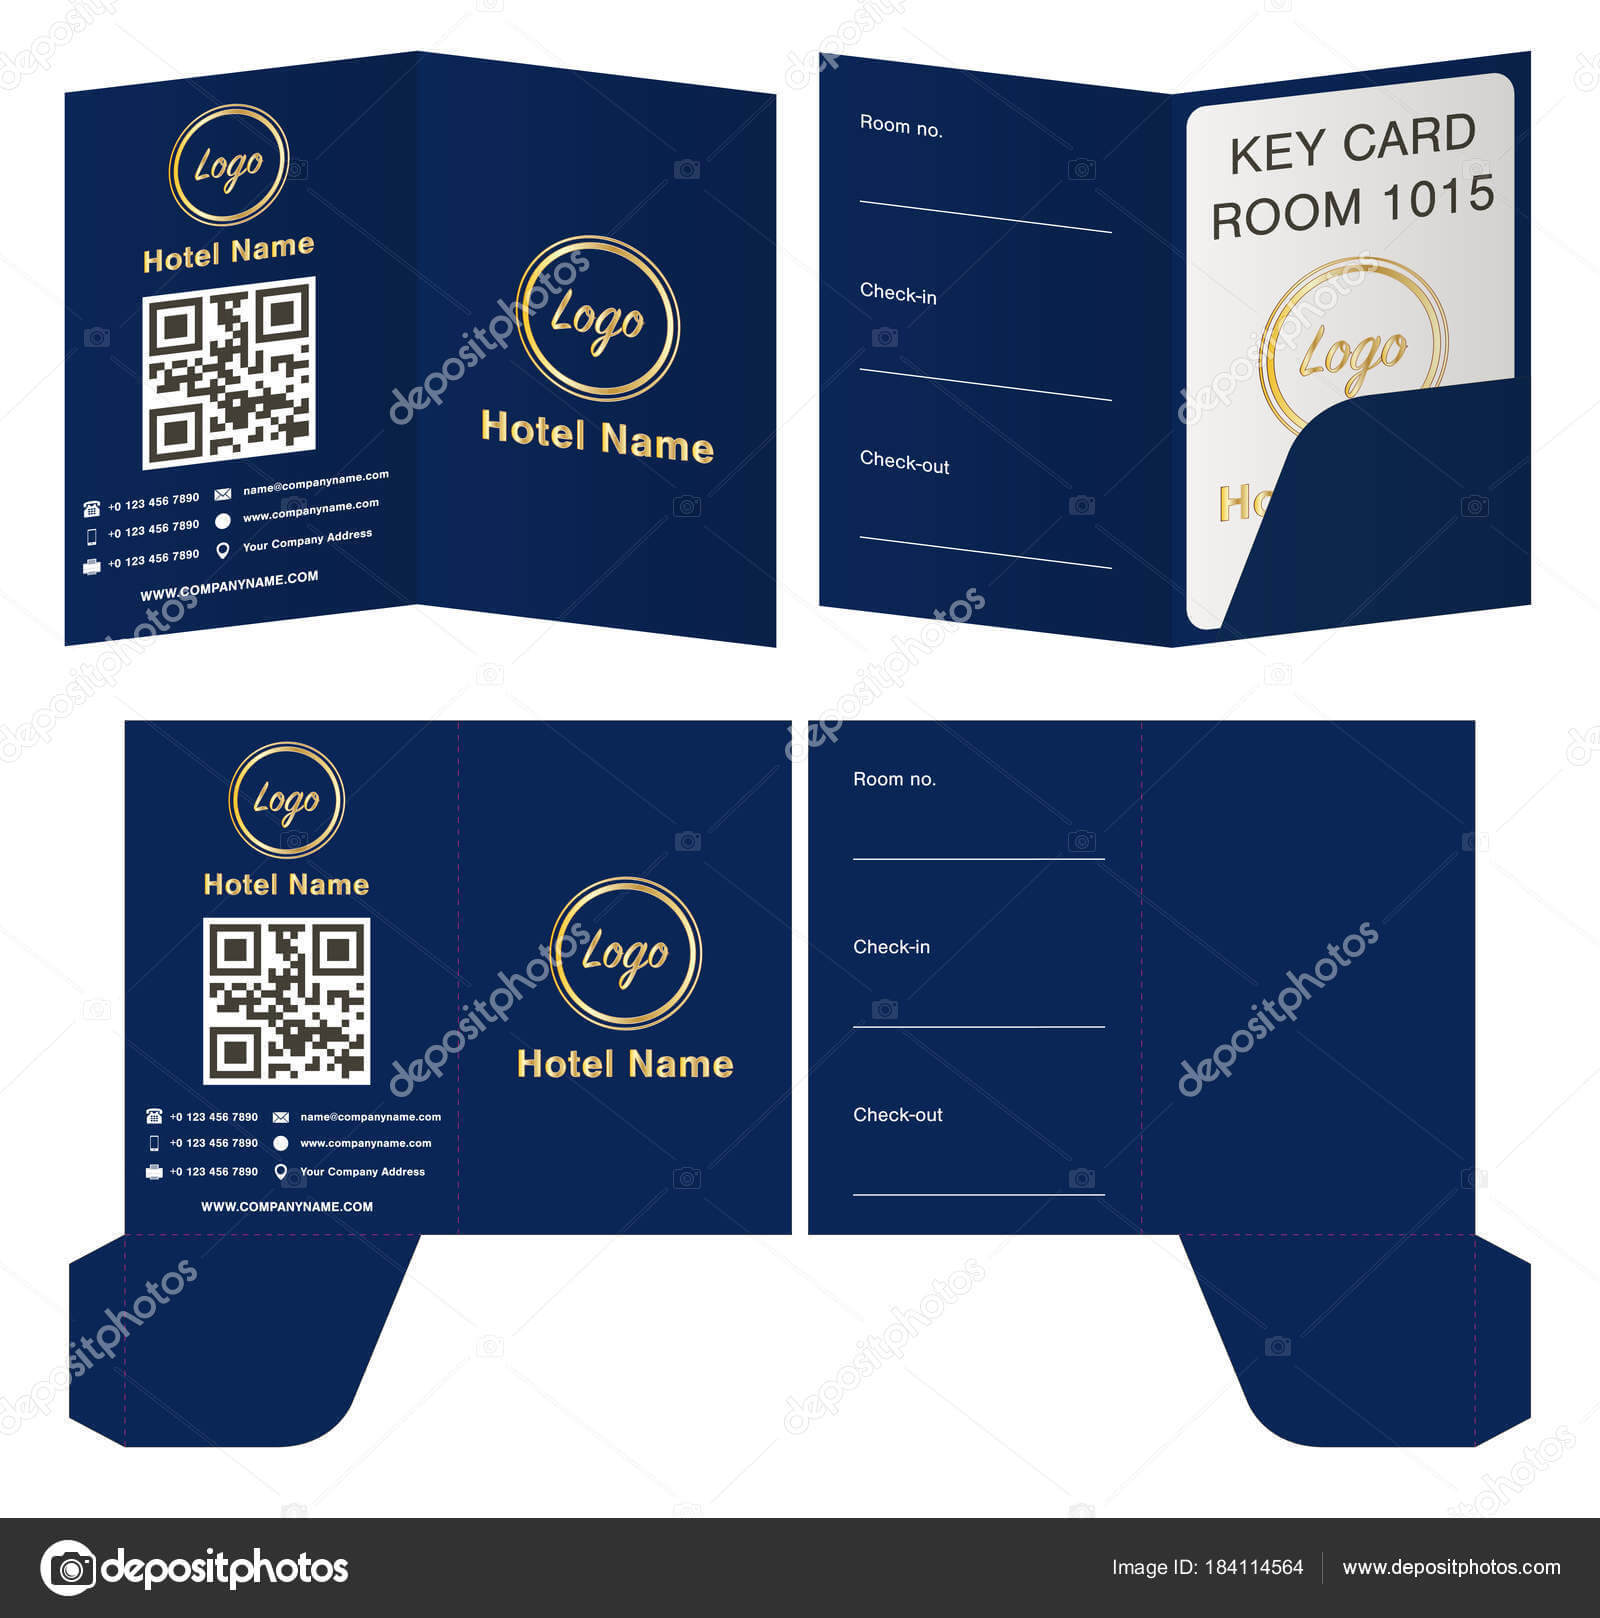 Key Card Holder Template | Hotel Key Card Holder Folder With Hotel Key Card Template